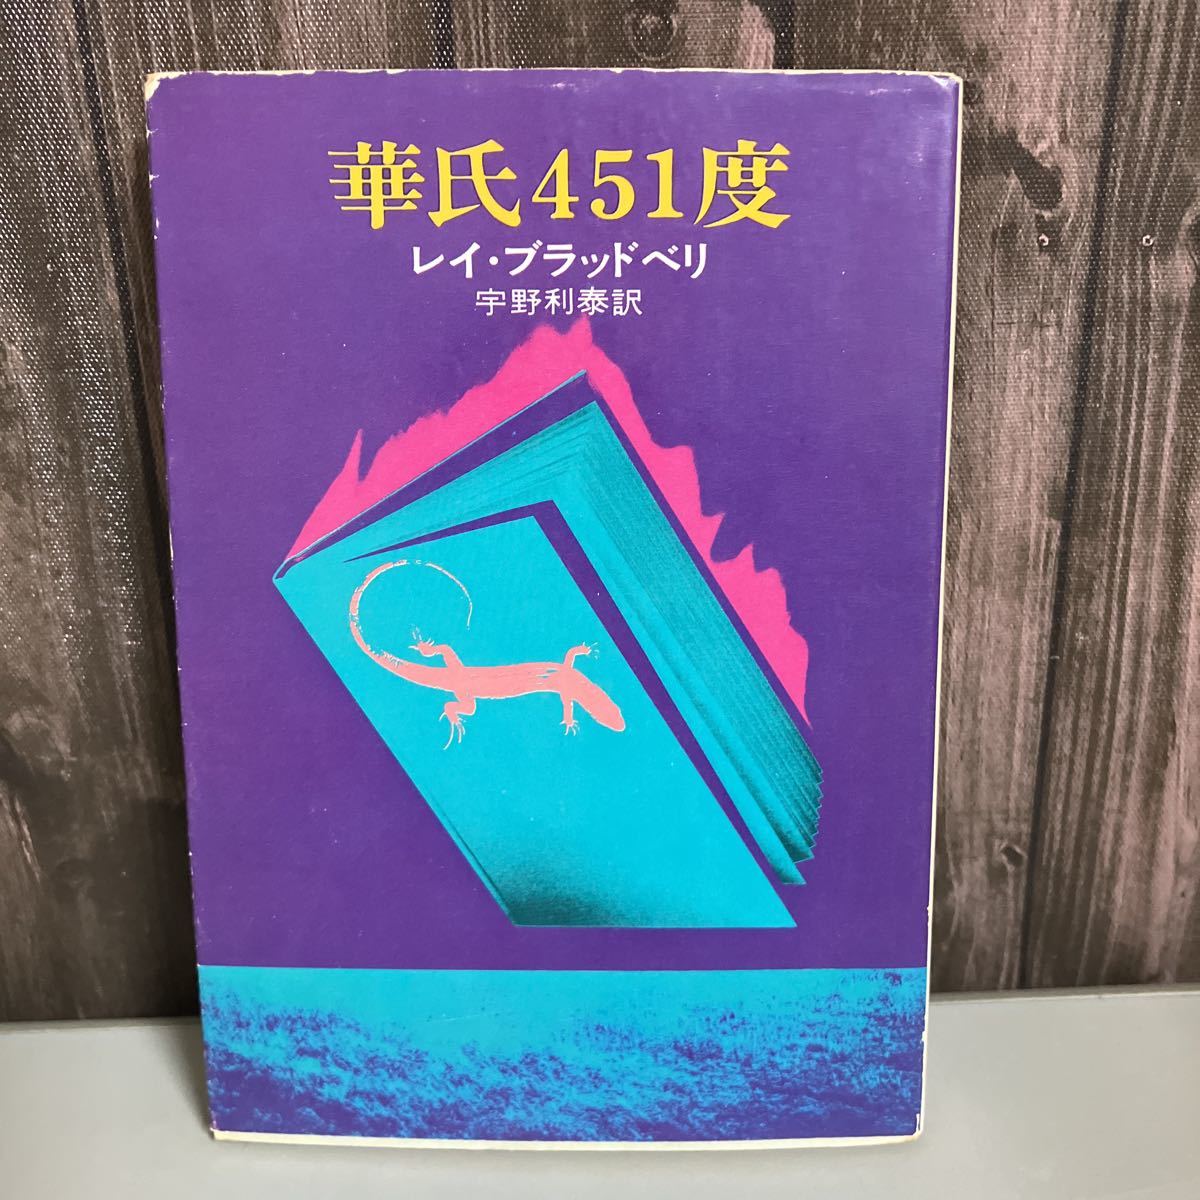 FAHRENHEIT 451 華氏451度 (Ray Bradbury) - TRILLIUM for Apple IIc